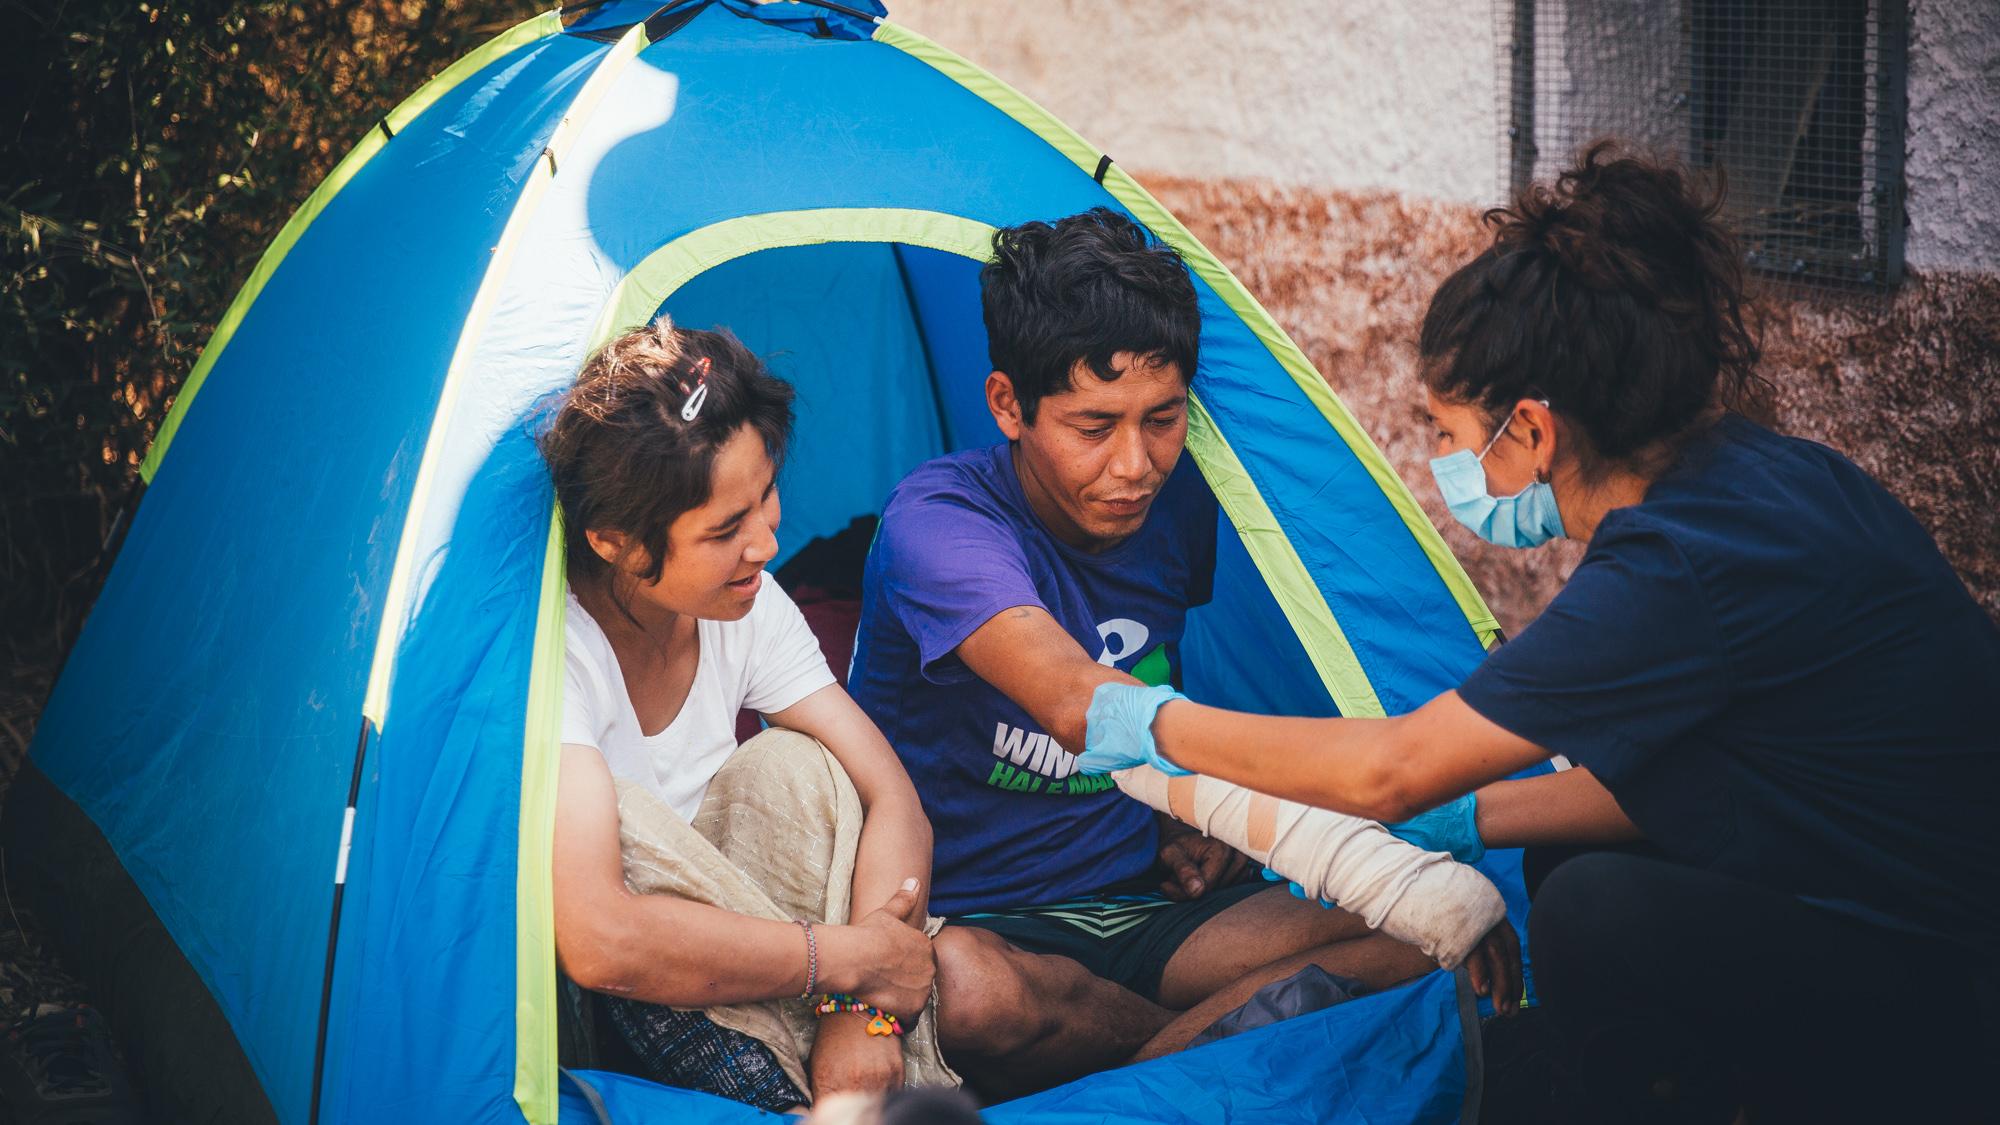 Eindrücke aus dem Flüchlingscamp Moria. Foto: Caritas international